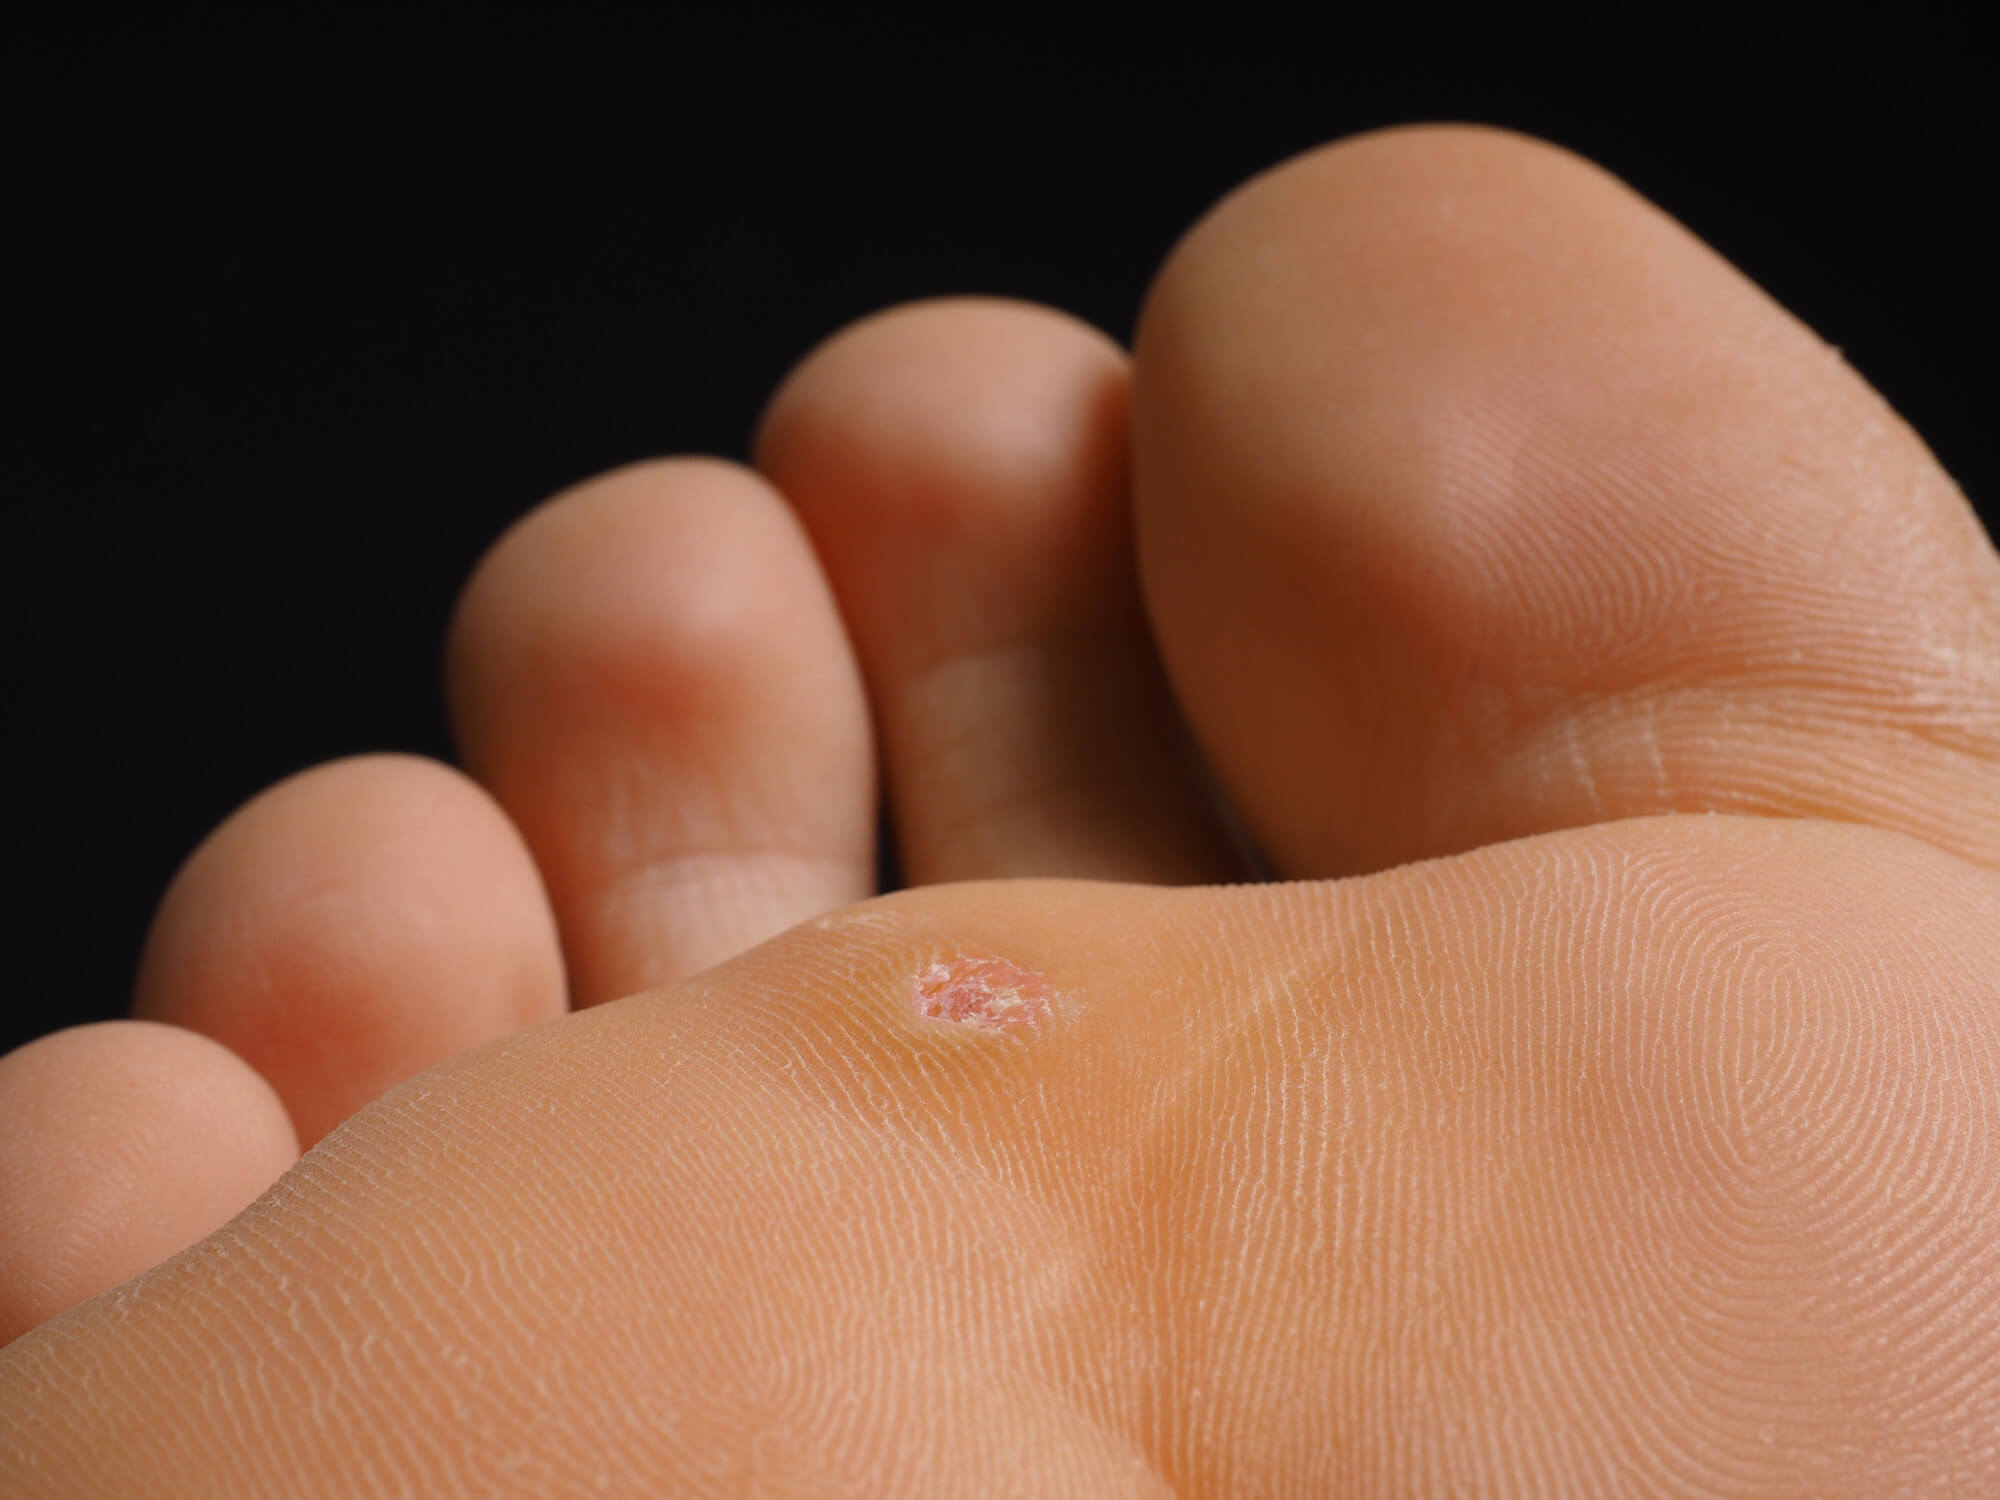 warts in foot sole